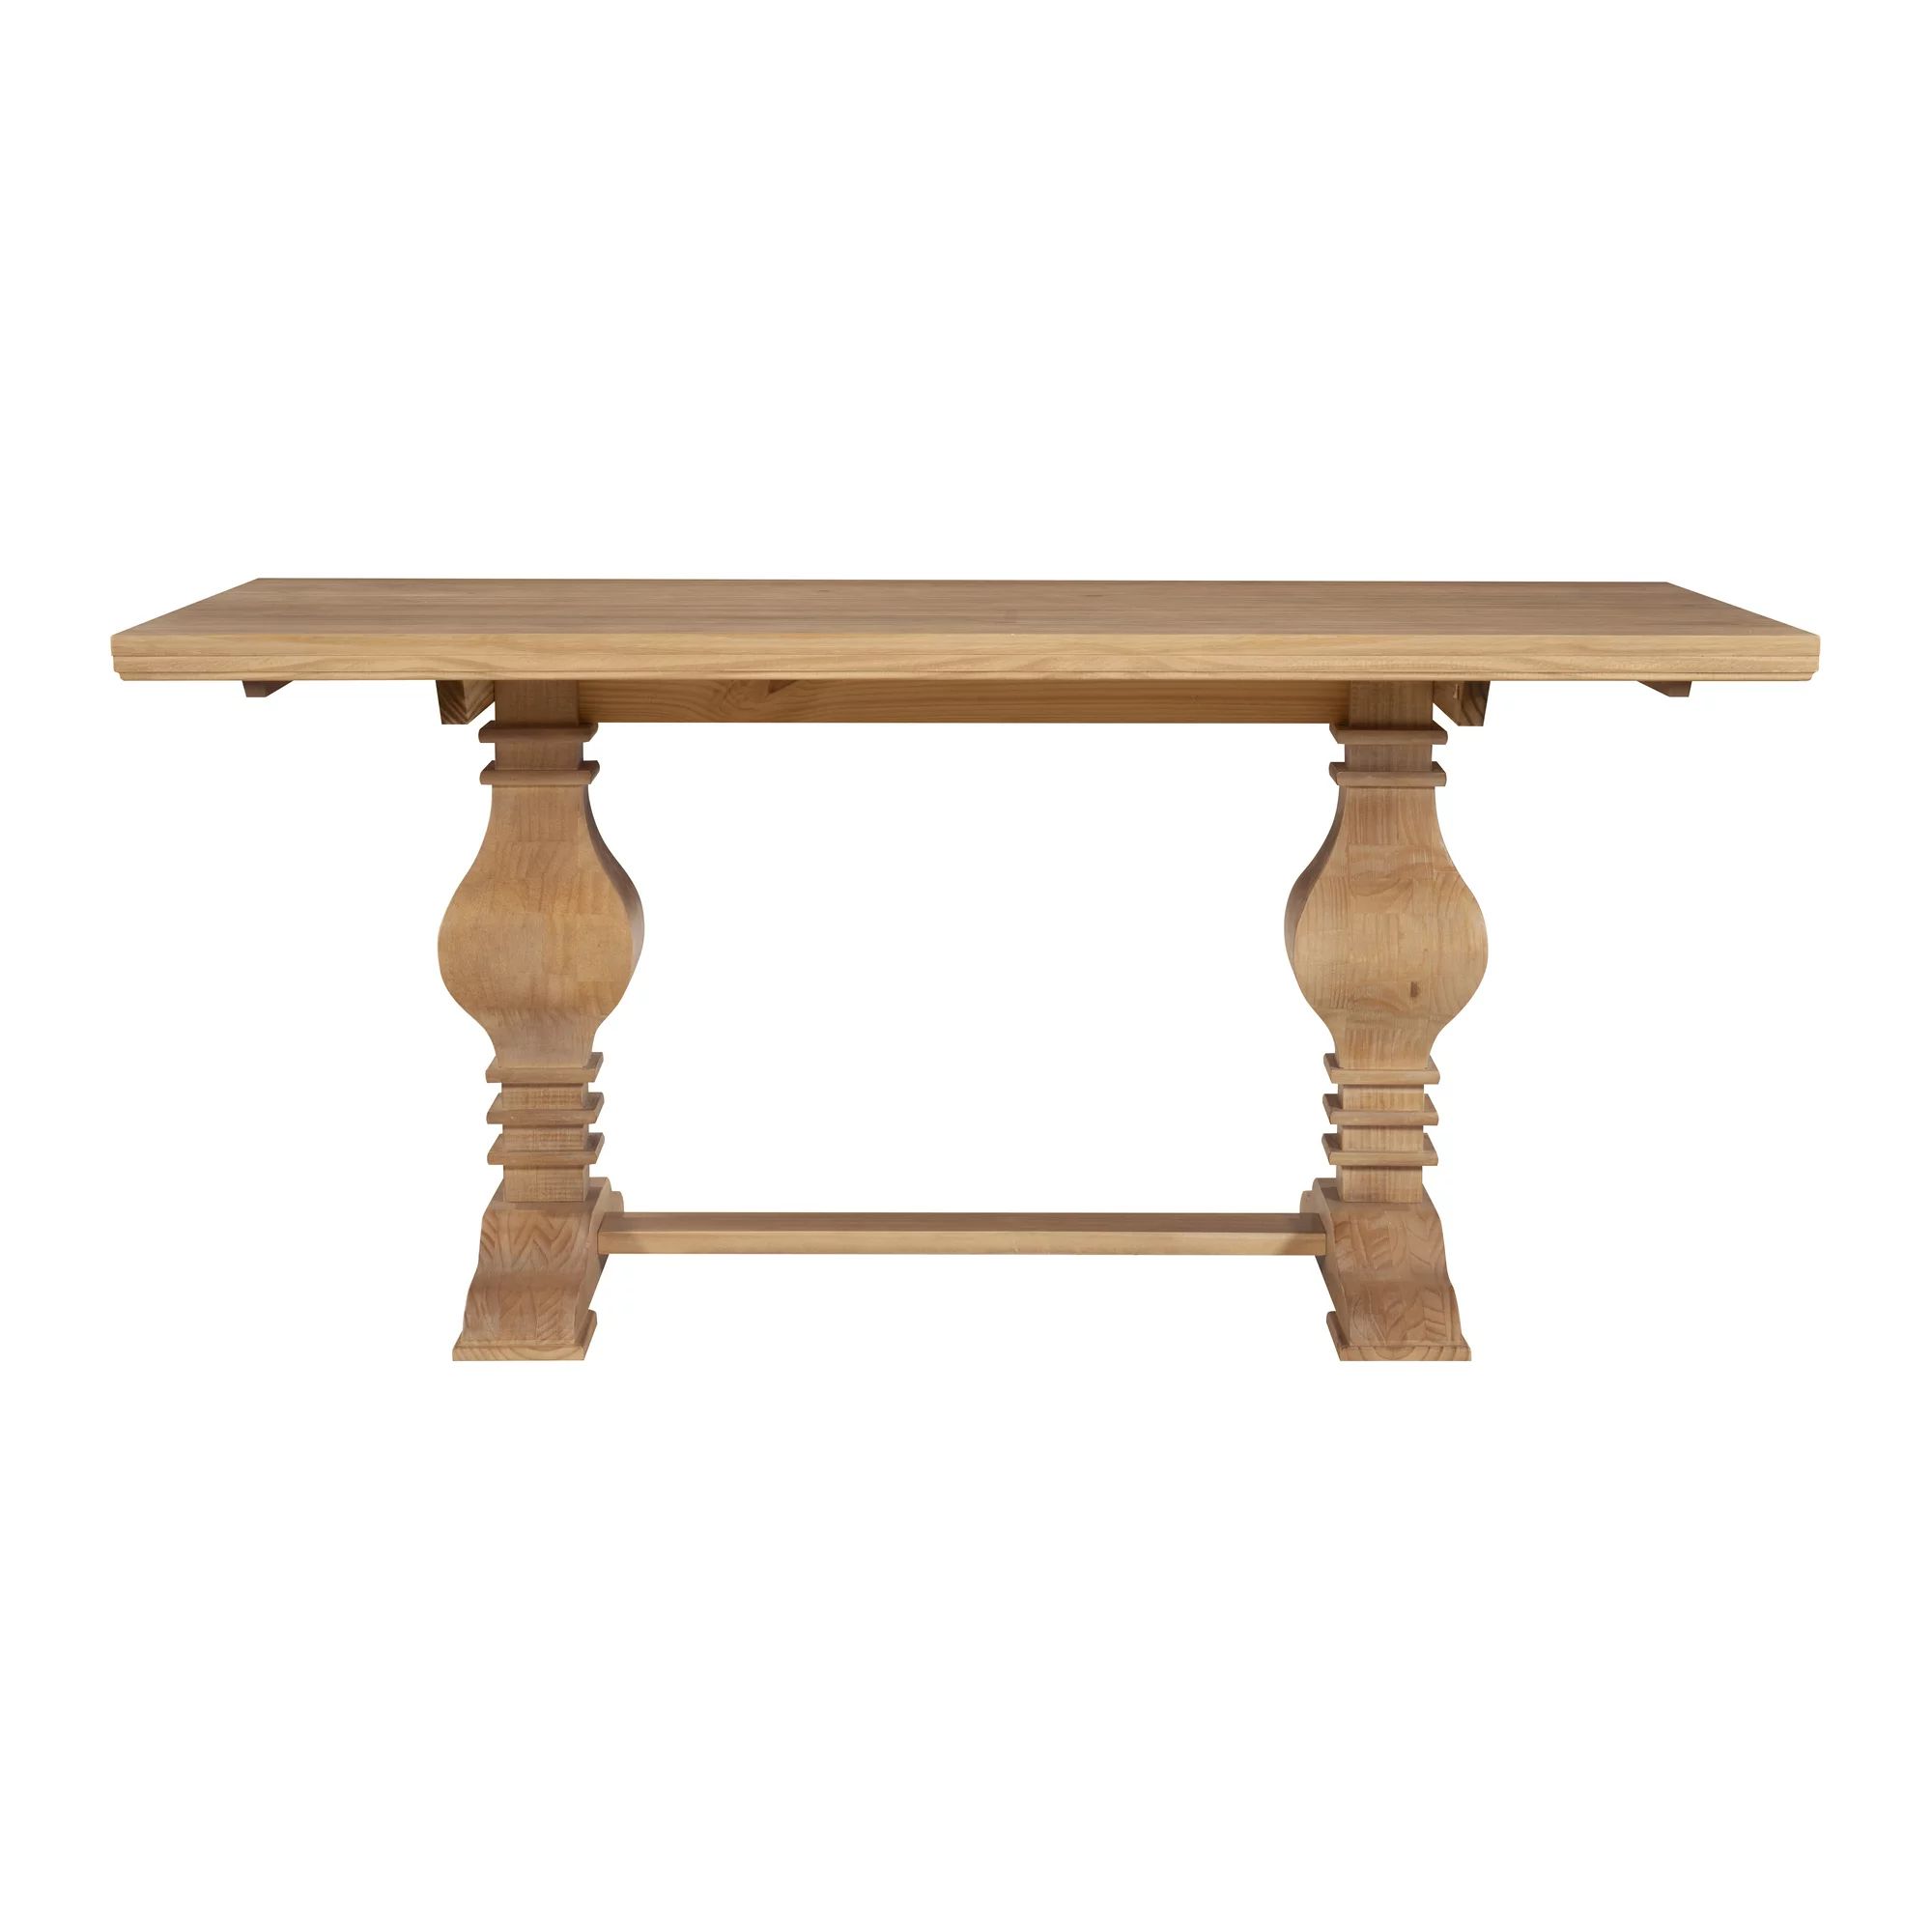 Balasco 67"x38" Solid Wood Double Pedestal Dining Table, Rustic Honey | Walmart (US)